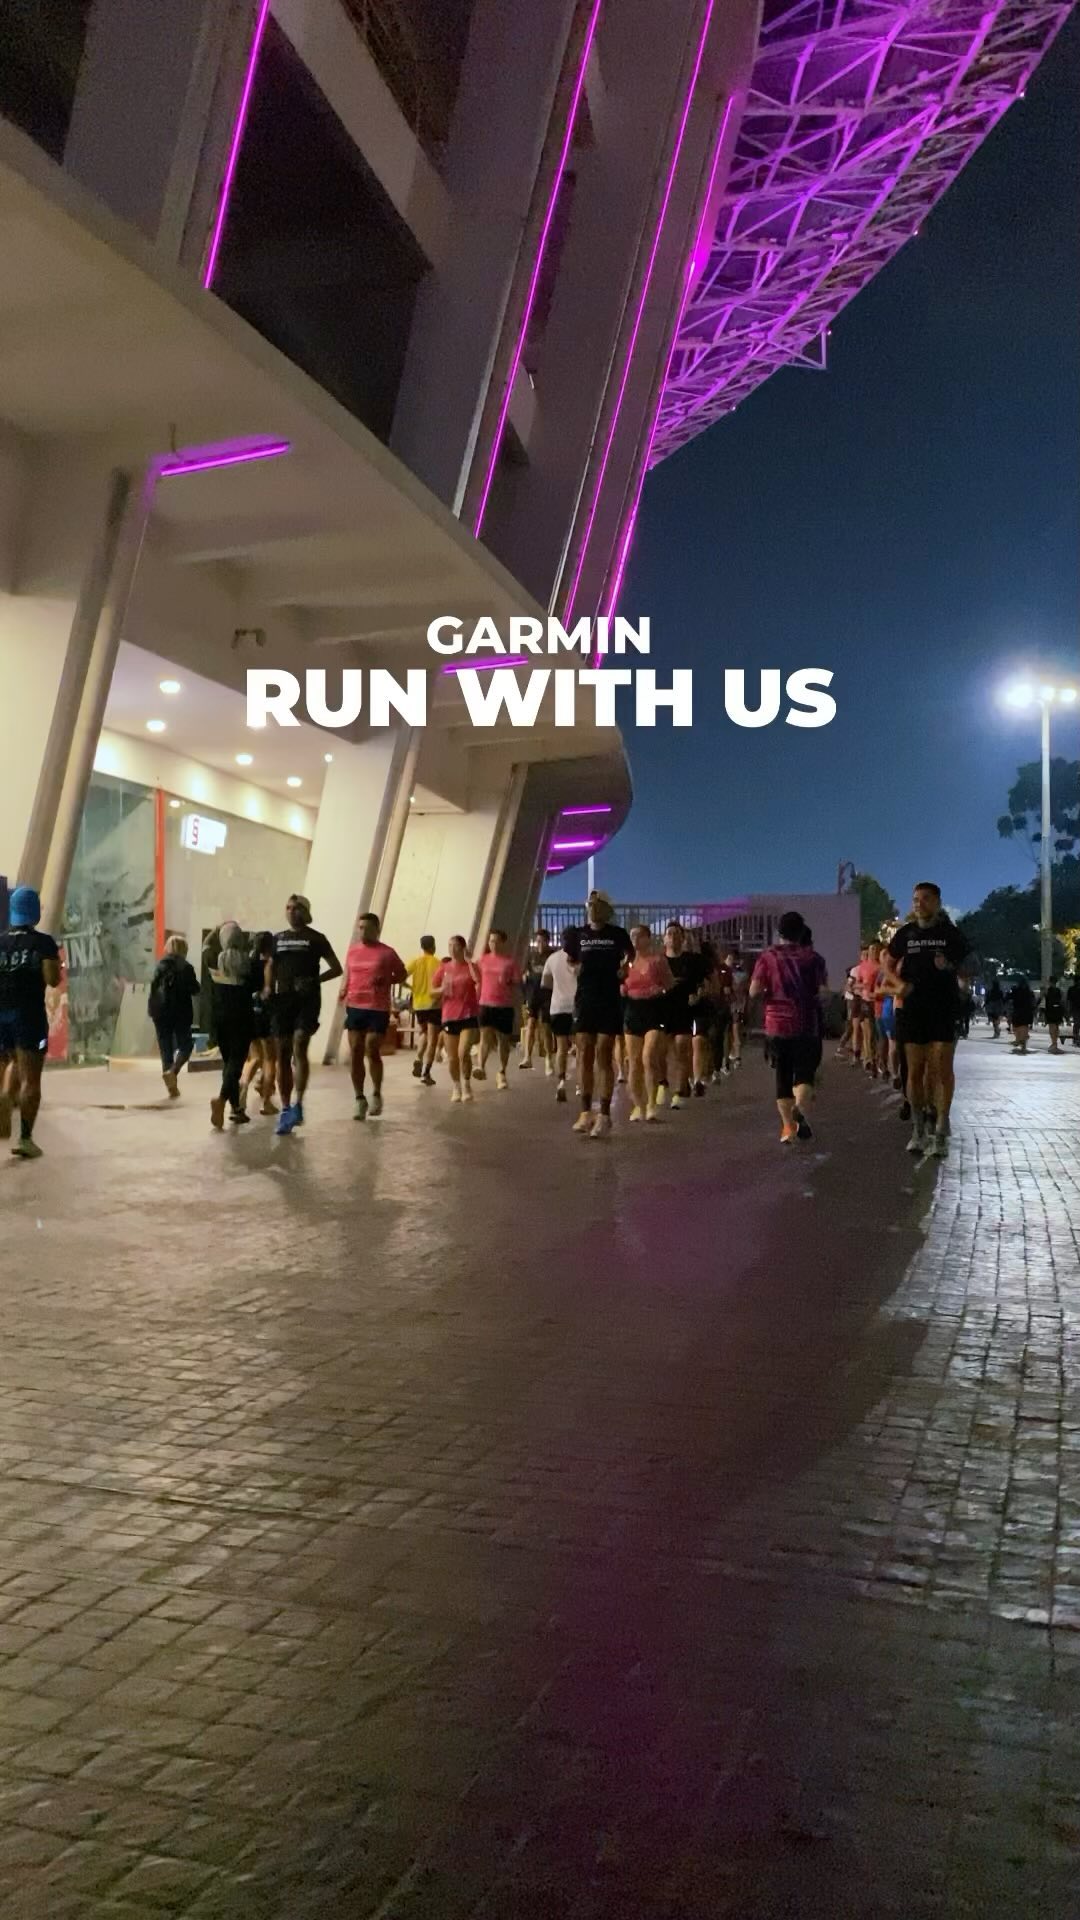 Rabu malam jam 7 di GBK pasti udah tau semua kalo itu saatnya Run with Us bersama @garminid @garmingrc.id !! Makin lama makin rame dan makin seru, makanya ikutan yuk minggu depan! Kita tunggu yaa☺️🔥🏃‍♂️🏃‍♀️

𝐒𝐚𝐯𝐞 𝐝𝐚𝐧 𝐬𝐡𝐚𝐫𝐞 𝐢𝐧𝐟𝐨𝐫𝐦𝐚𝐬𝐢 𝐢𝐧𝐢 𝐲𝐚𝐚𝐚🙌🏻
—
Follow @gofit.id untuk dapatkan tips olahraga dan gaya hidup sehat yang kamu mau!

#running #runningcommunity #marathon #run #gofit #gofiters #reels #garmin #garminrunning